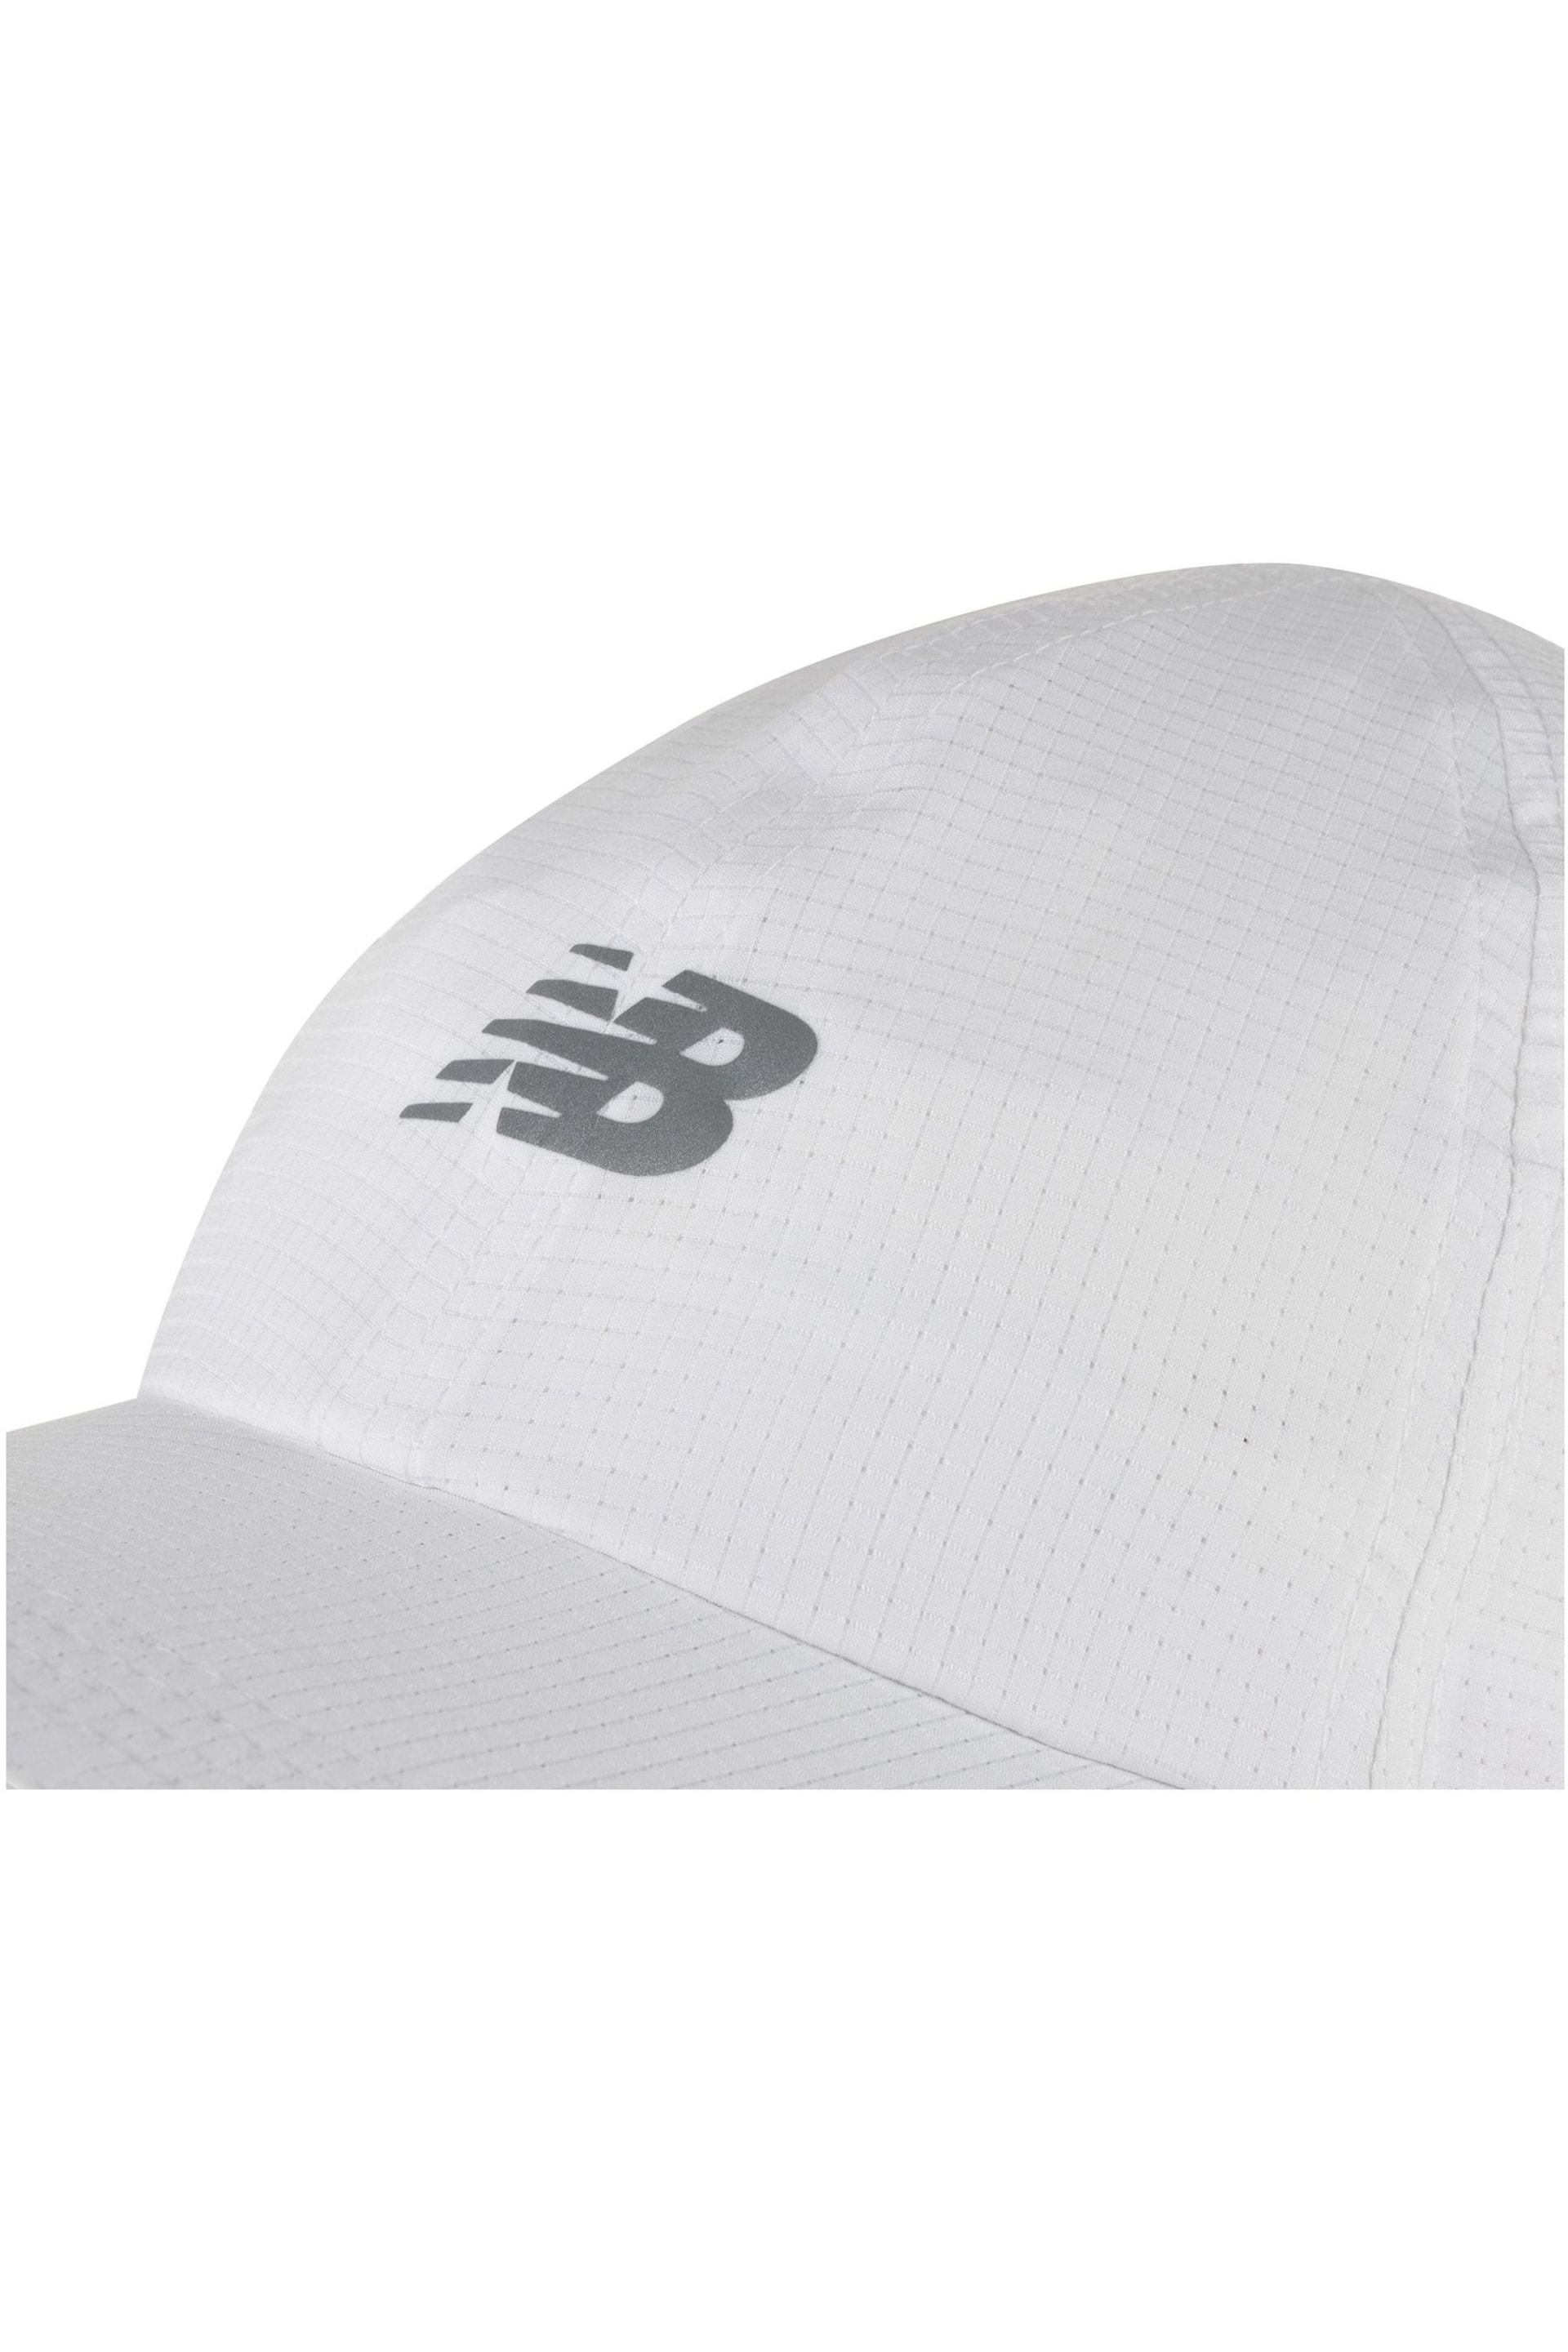 New Balance White 6 Panel Performance Hat - Image 2 of 3